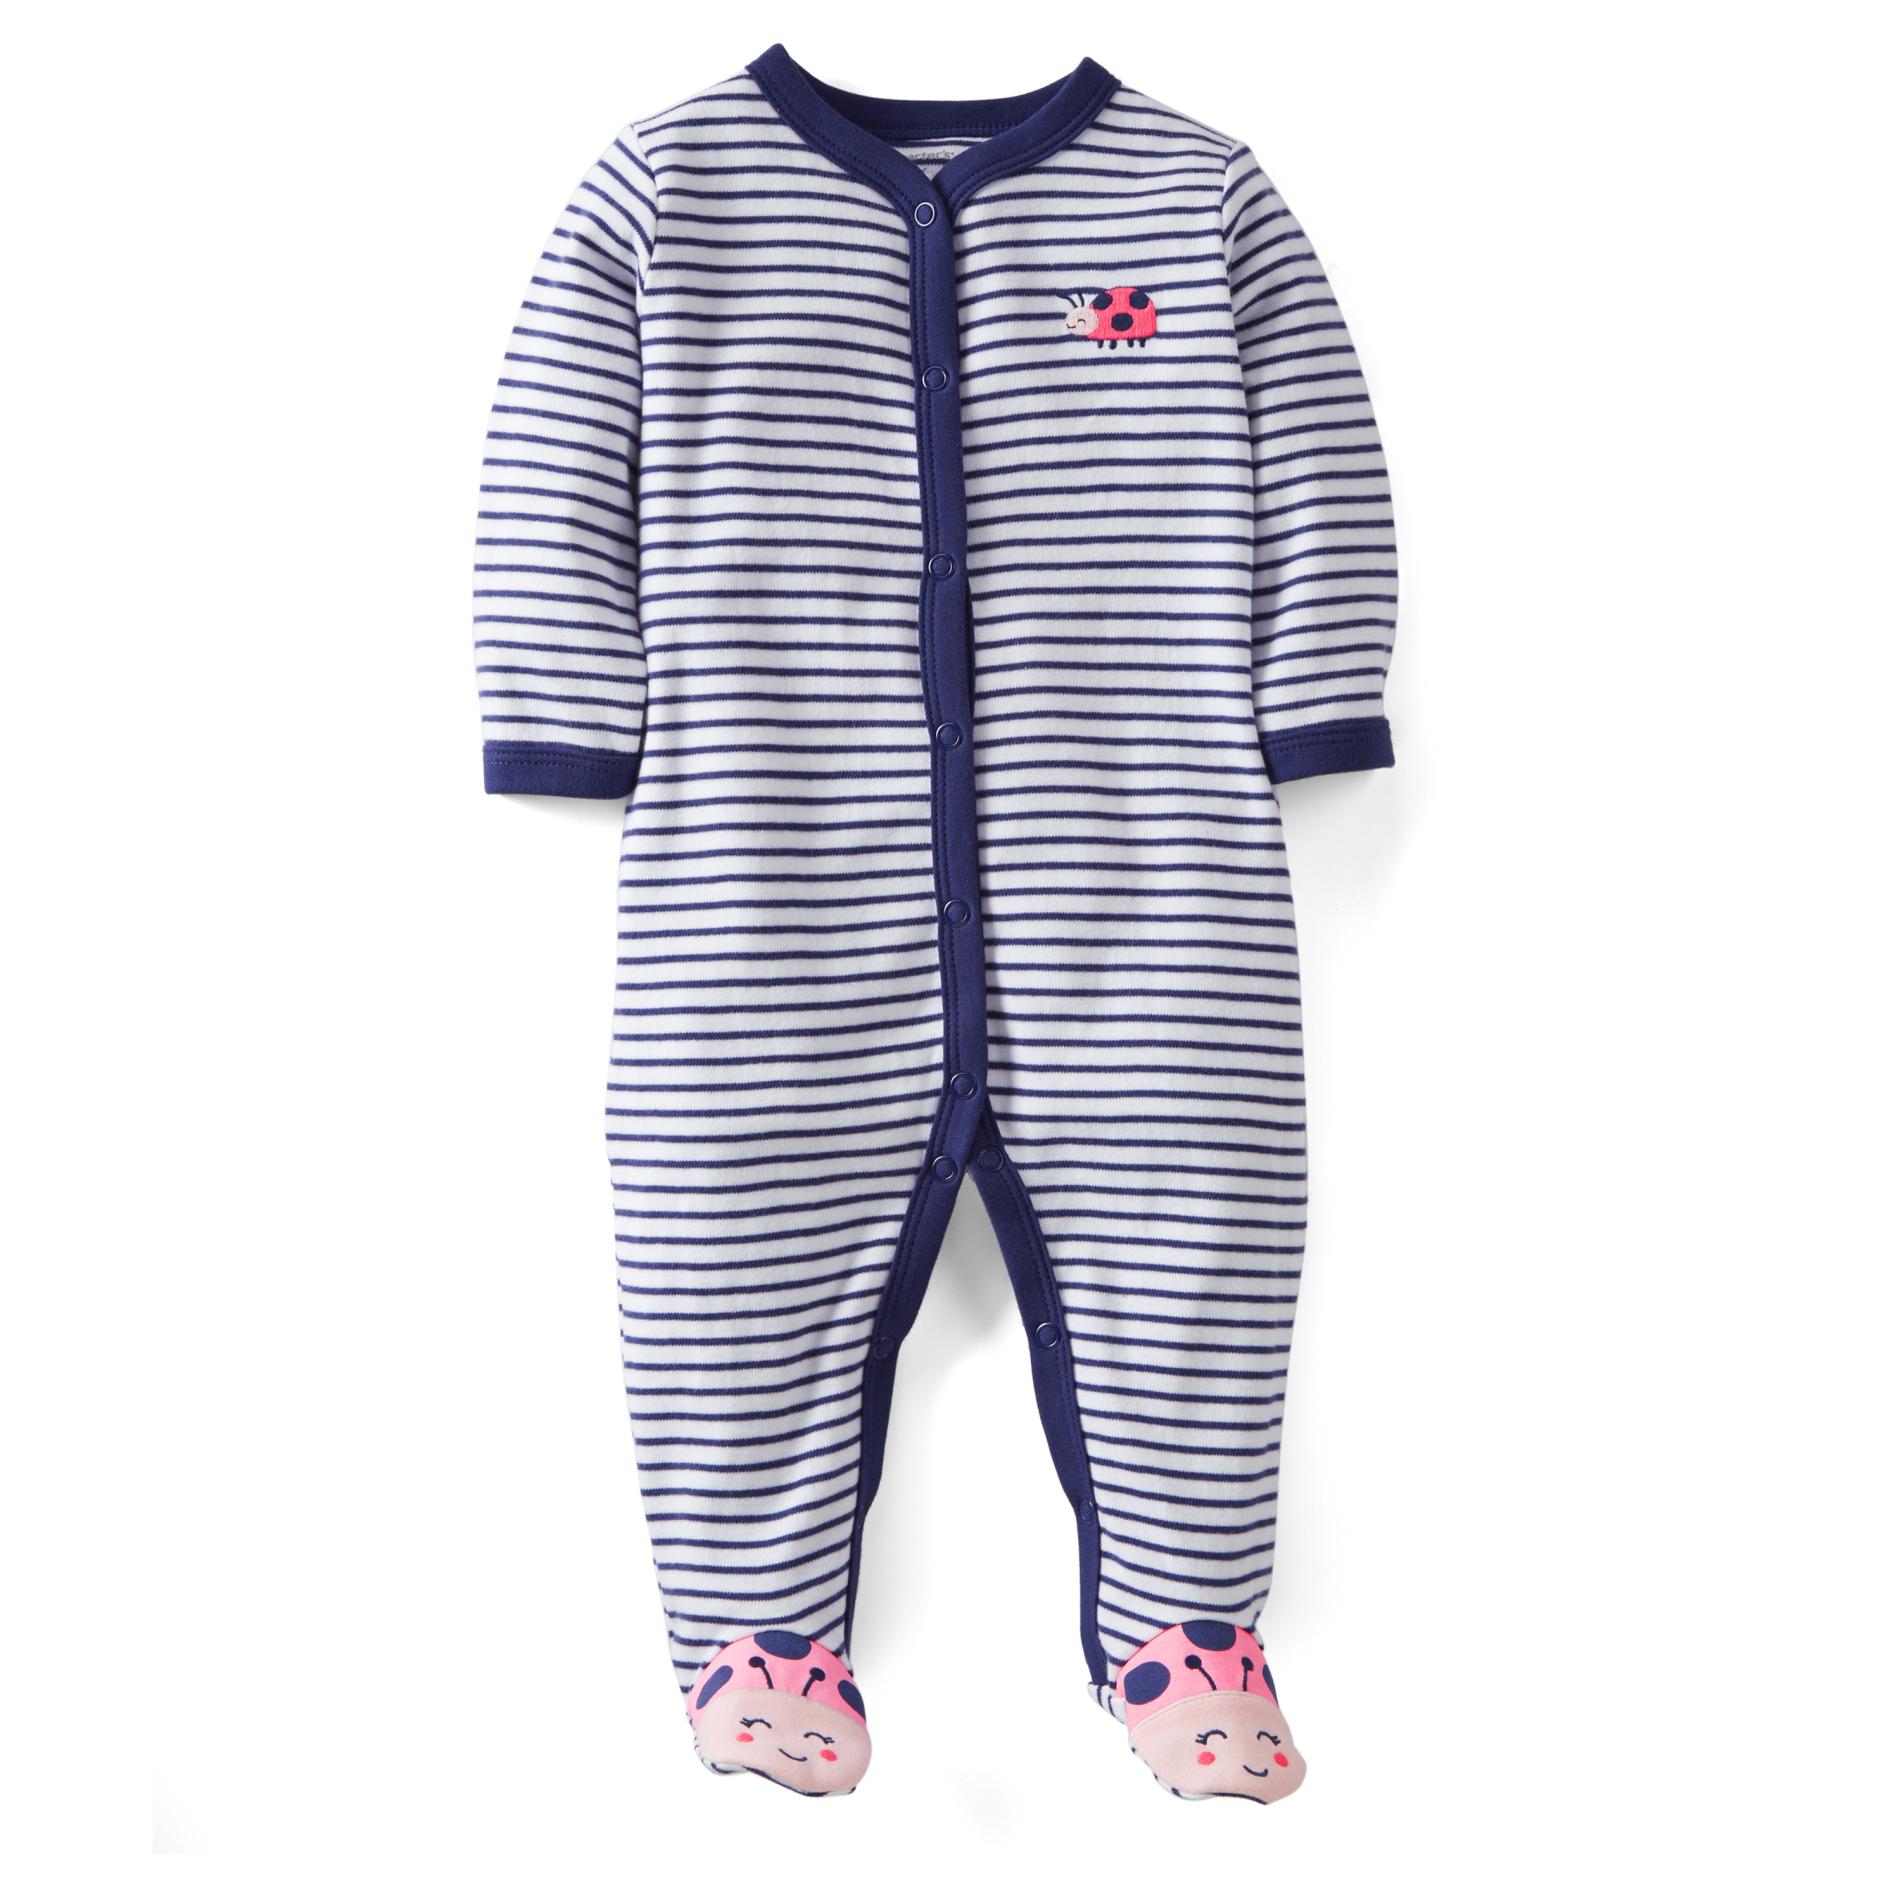 Carter's Newborn Girl's Footed Pajamas - Ladybug